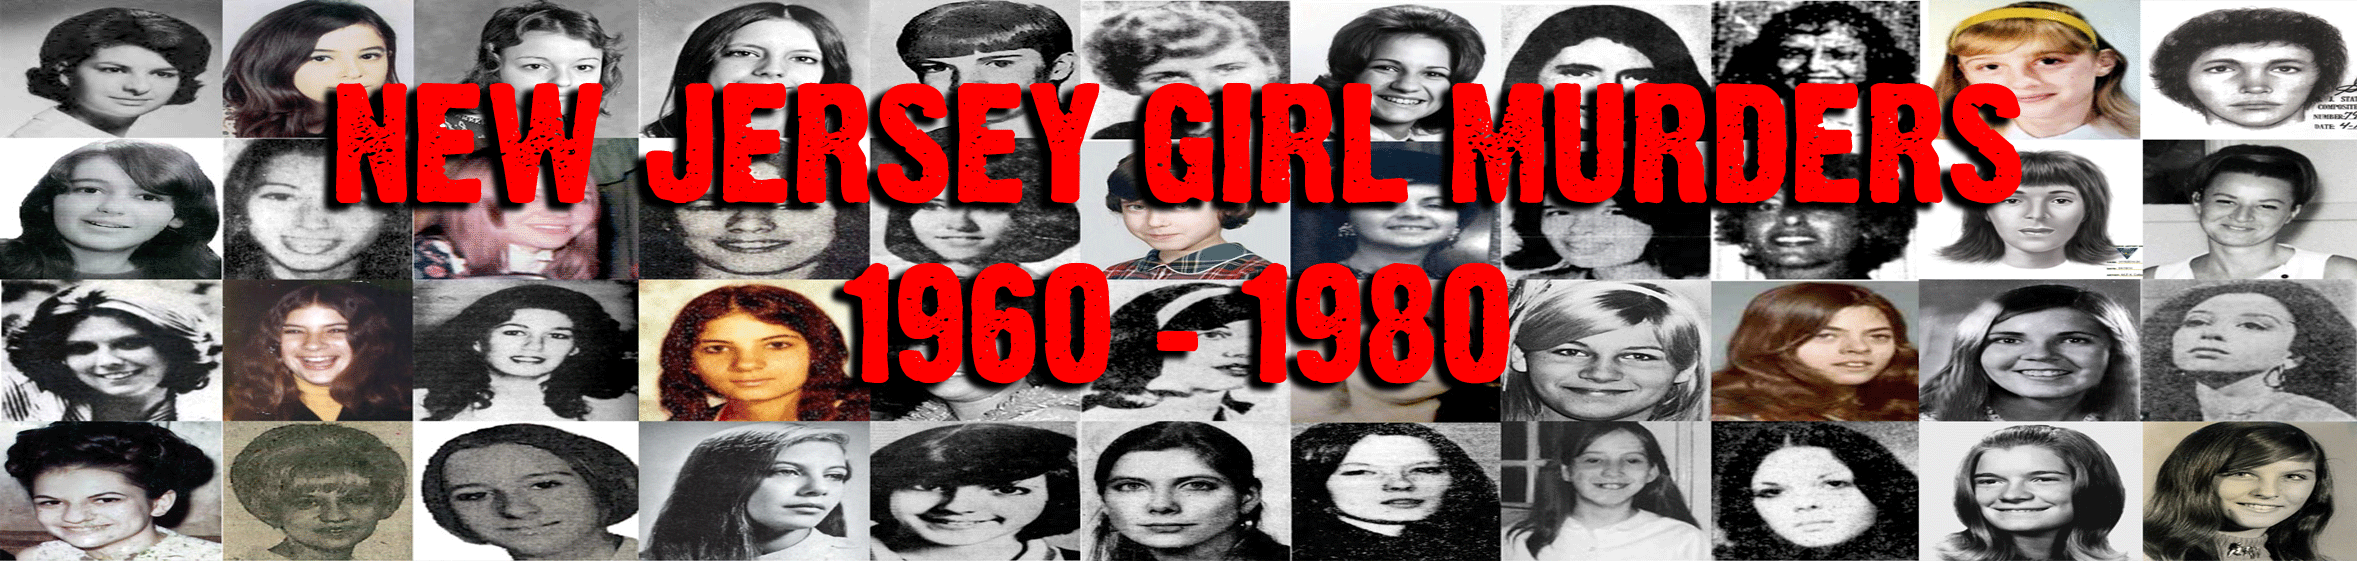 New Jersey Girl Murders